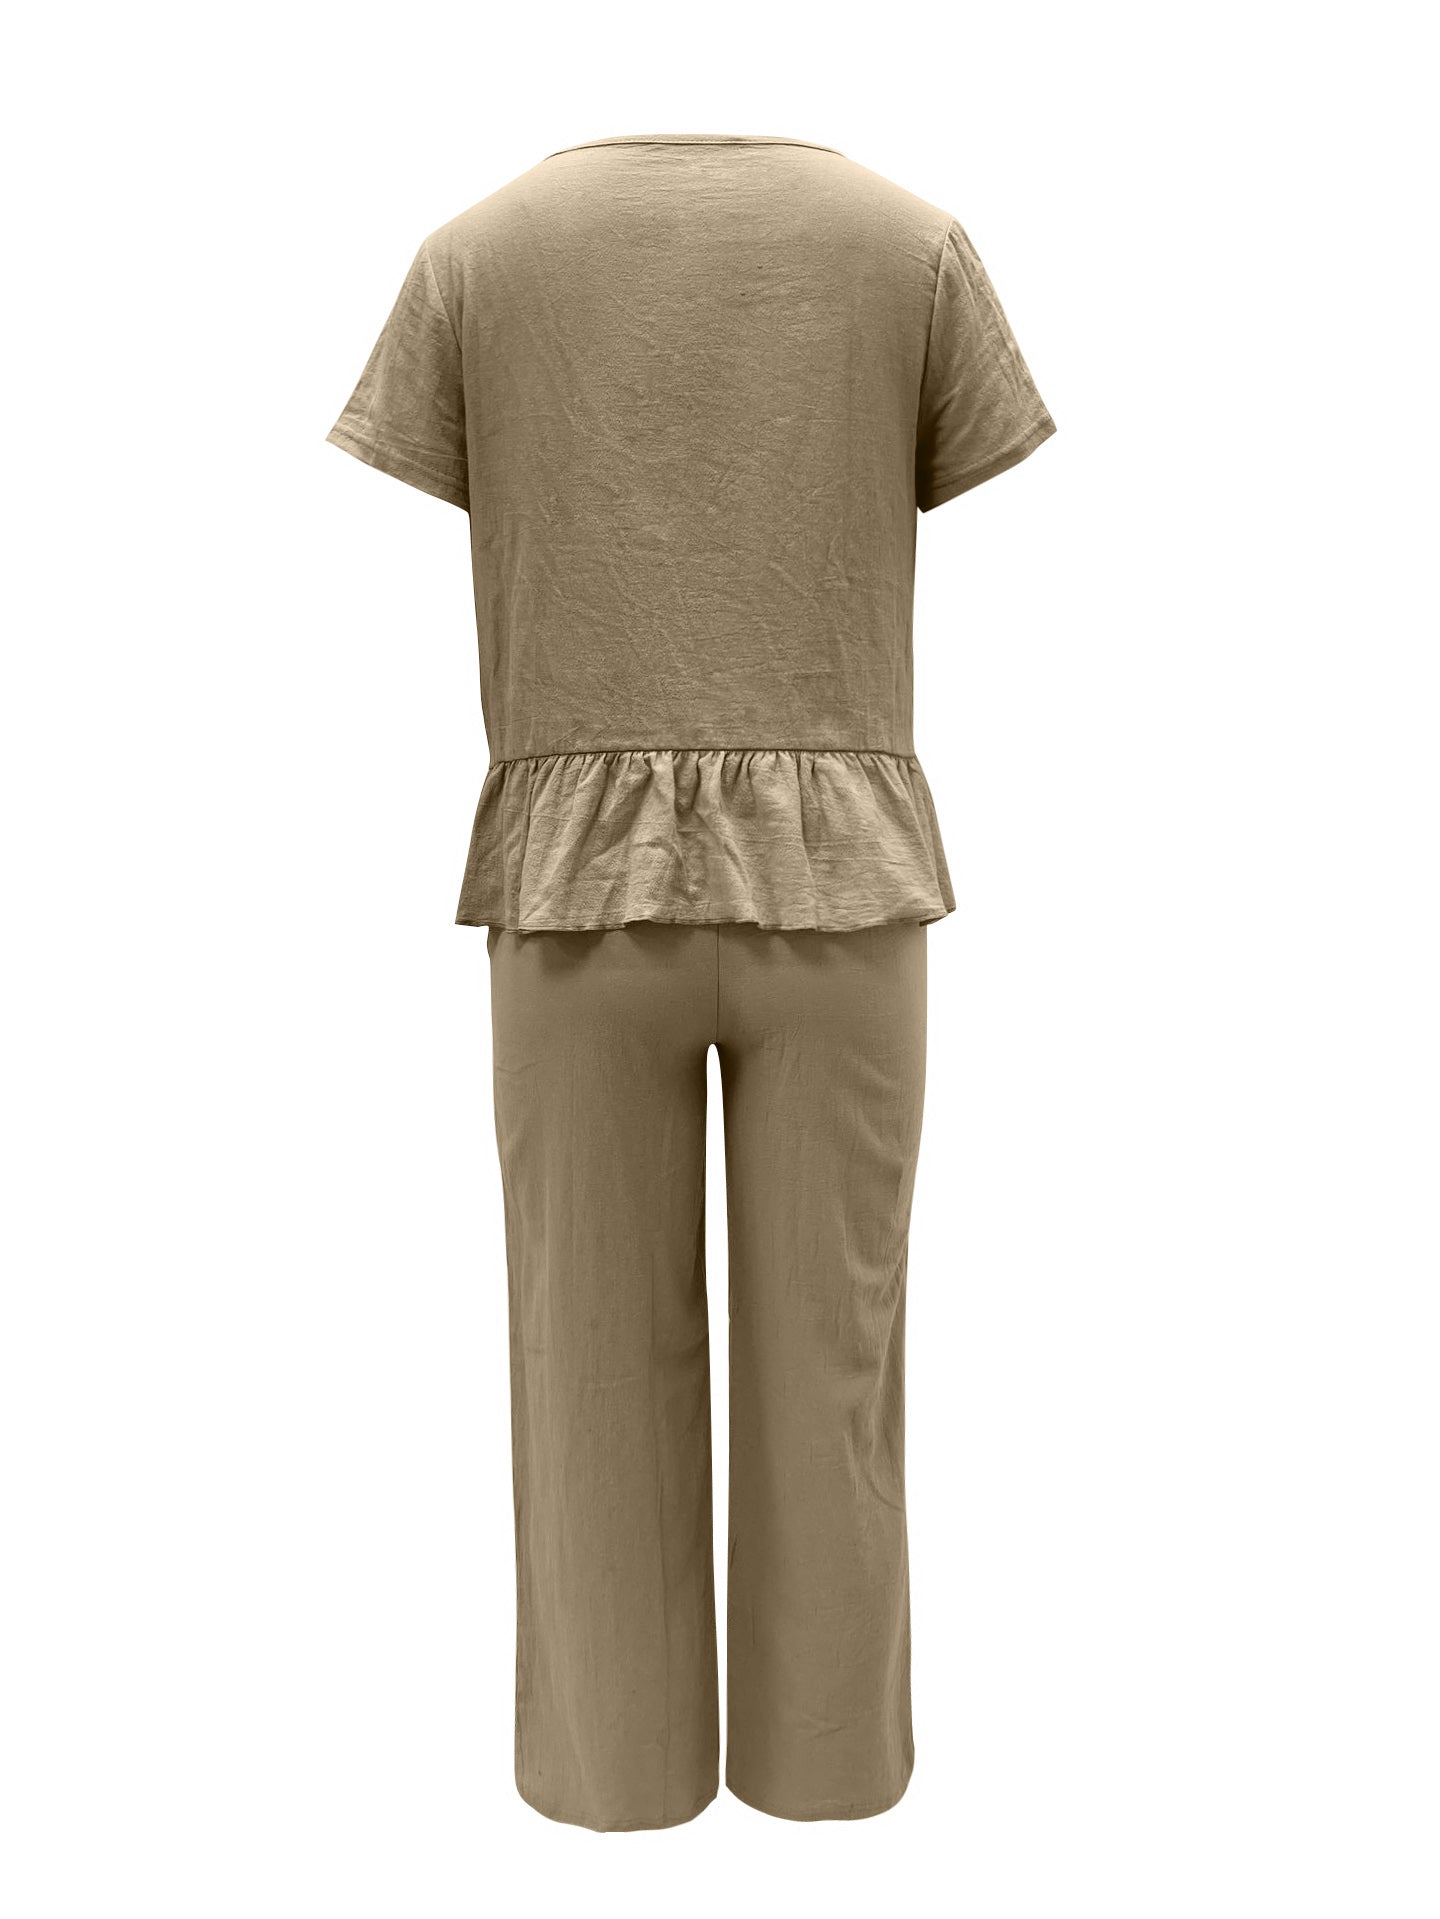 Styletrendy Peplum Round Neck Short Sleeve Top and Pants Set